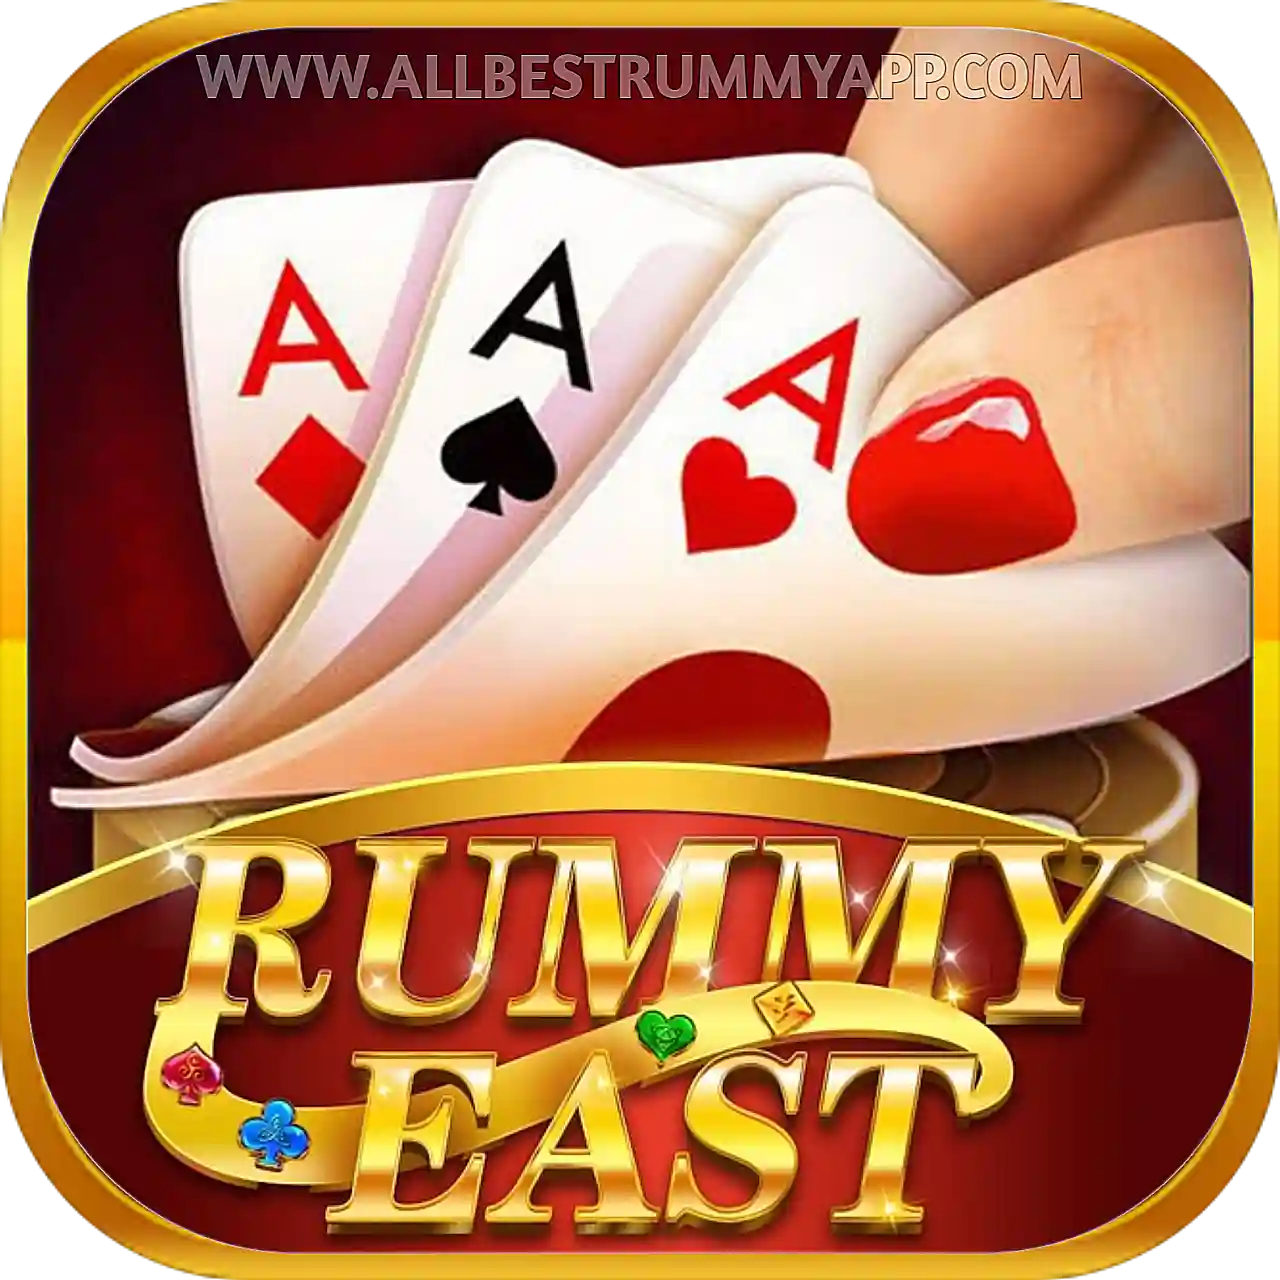 Rummy East Logo - All Best Rummy App